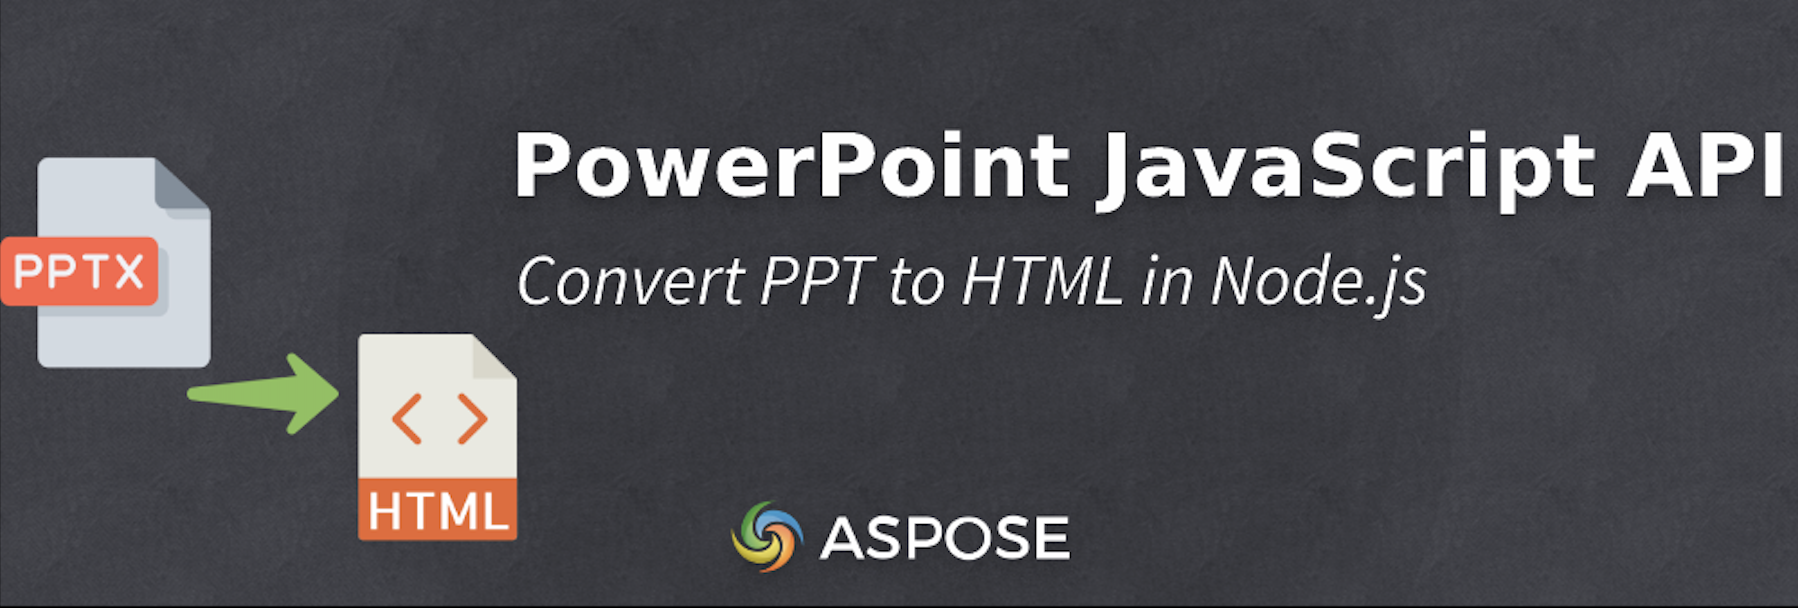 Node.js で PPT を HTML に変換する - PowerPoint JavaScript API